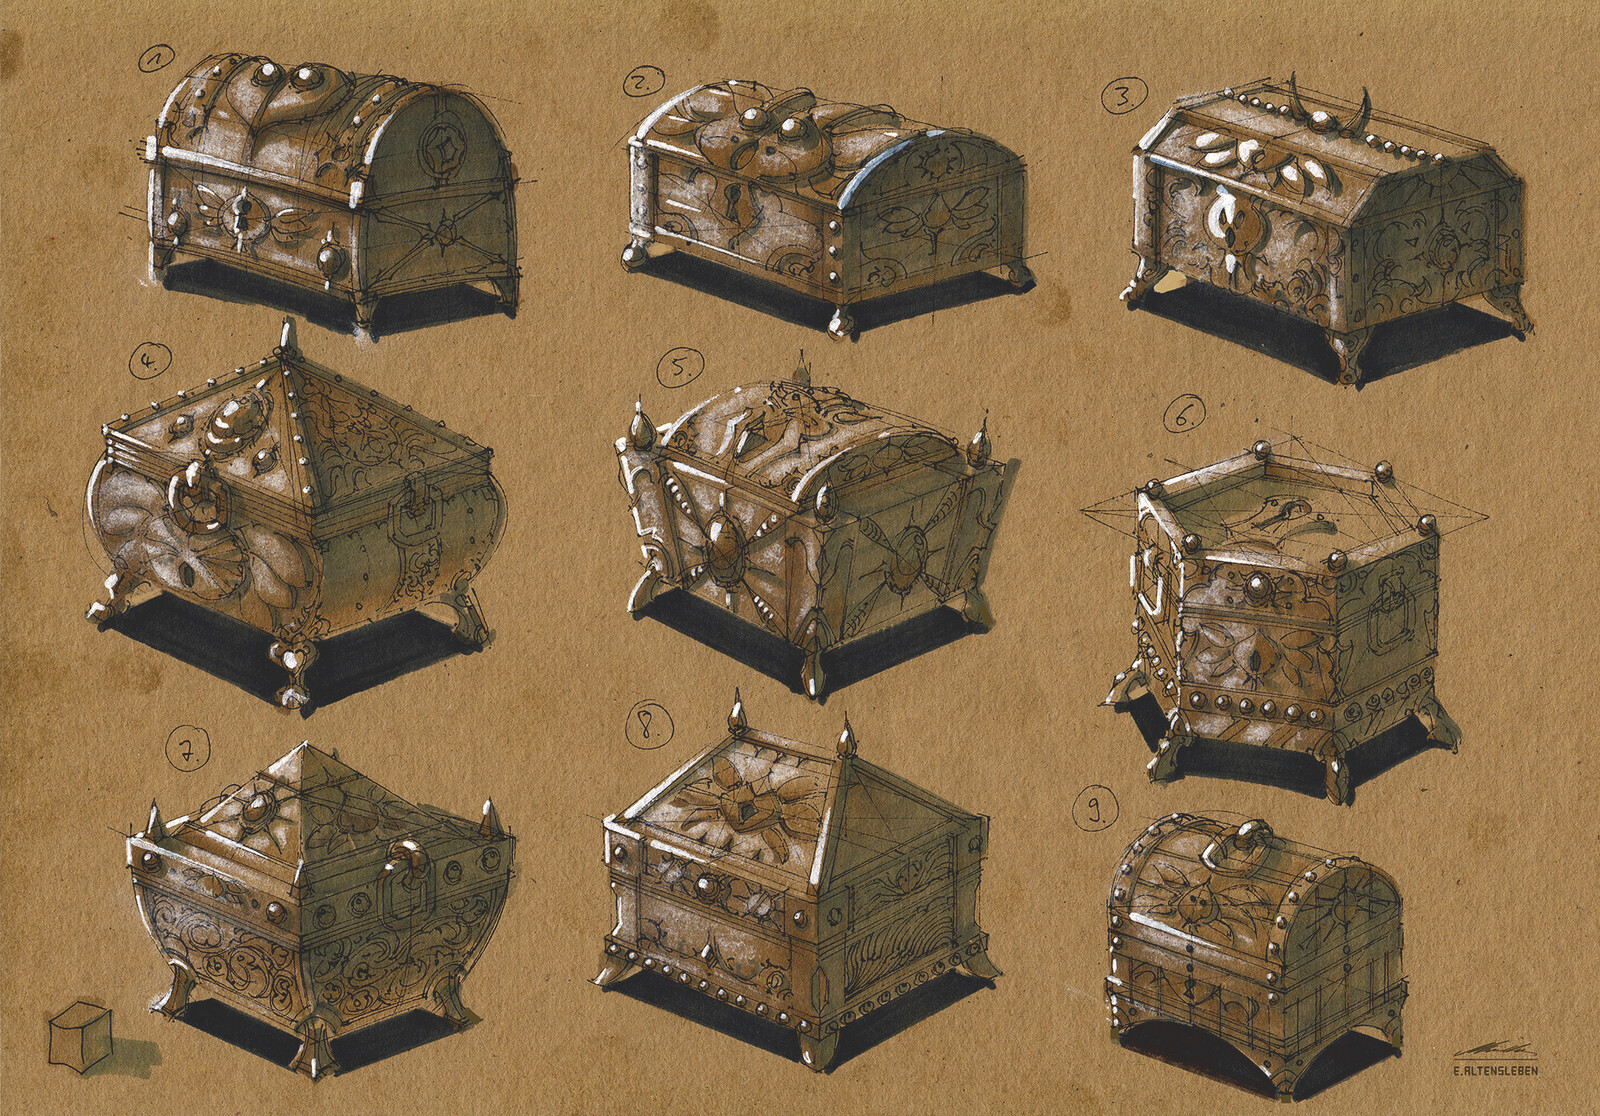 Box of Pandora